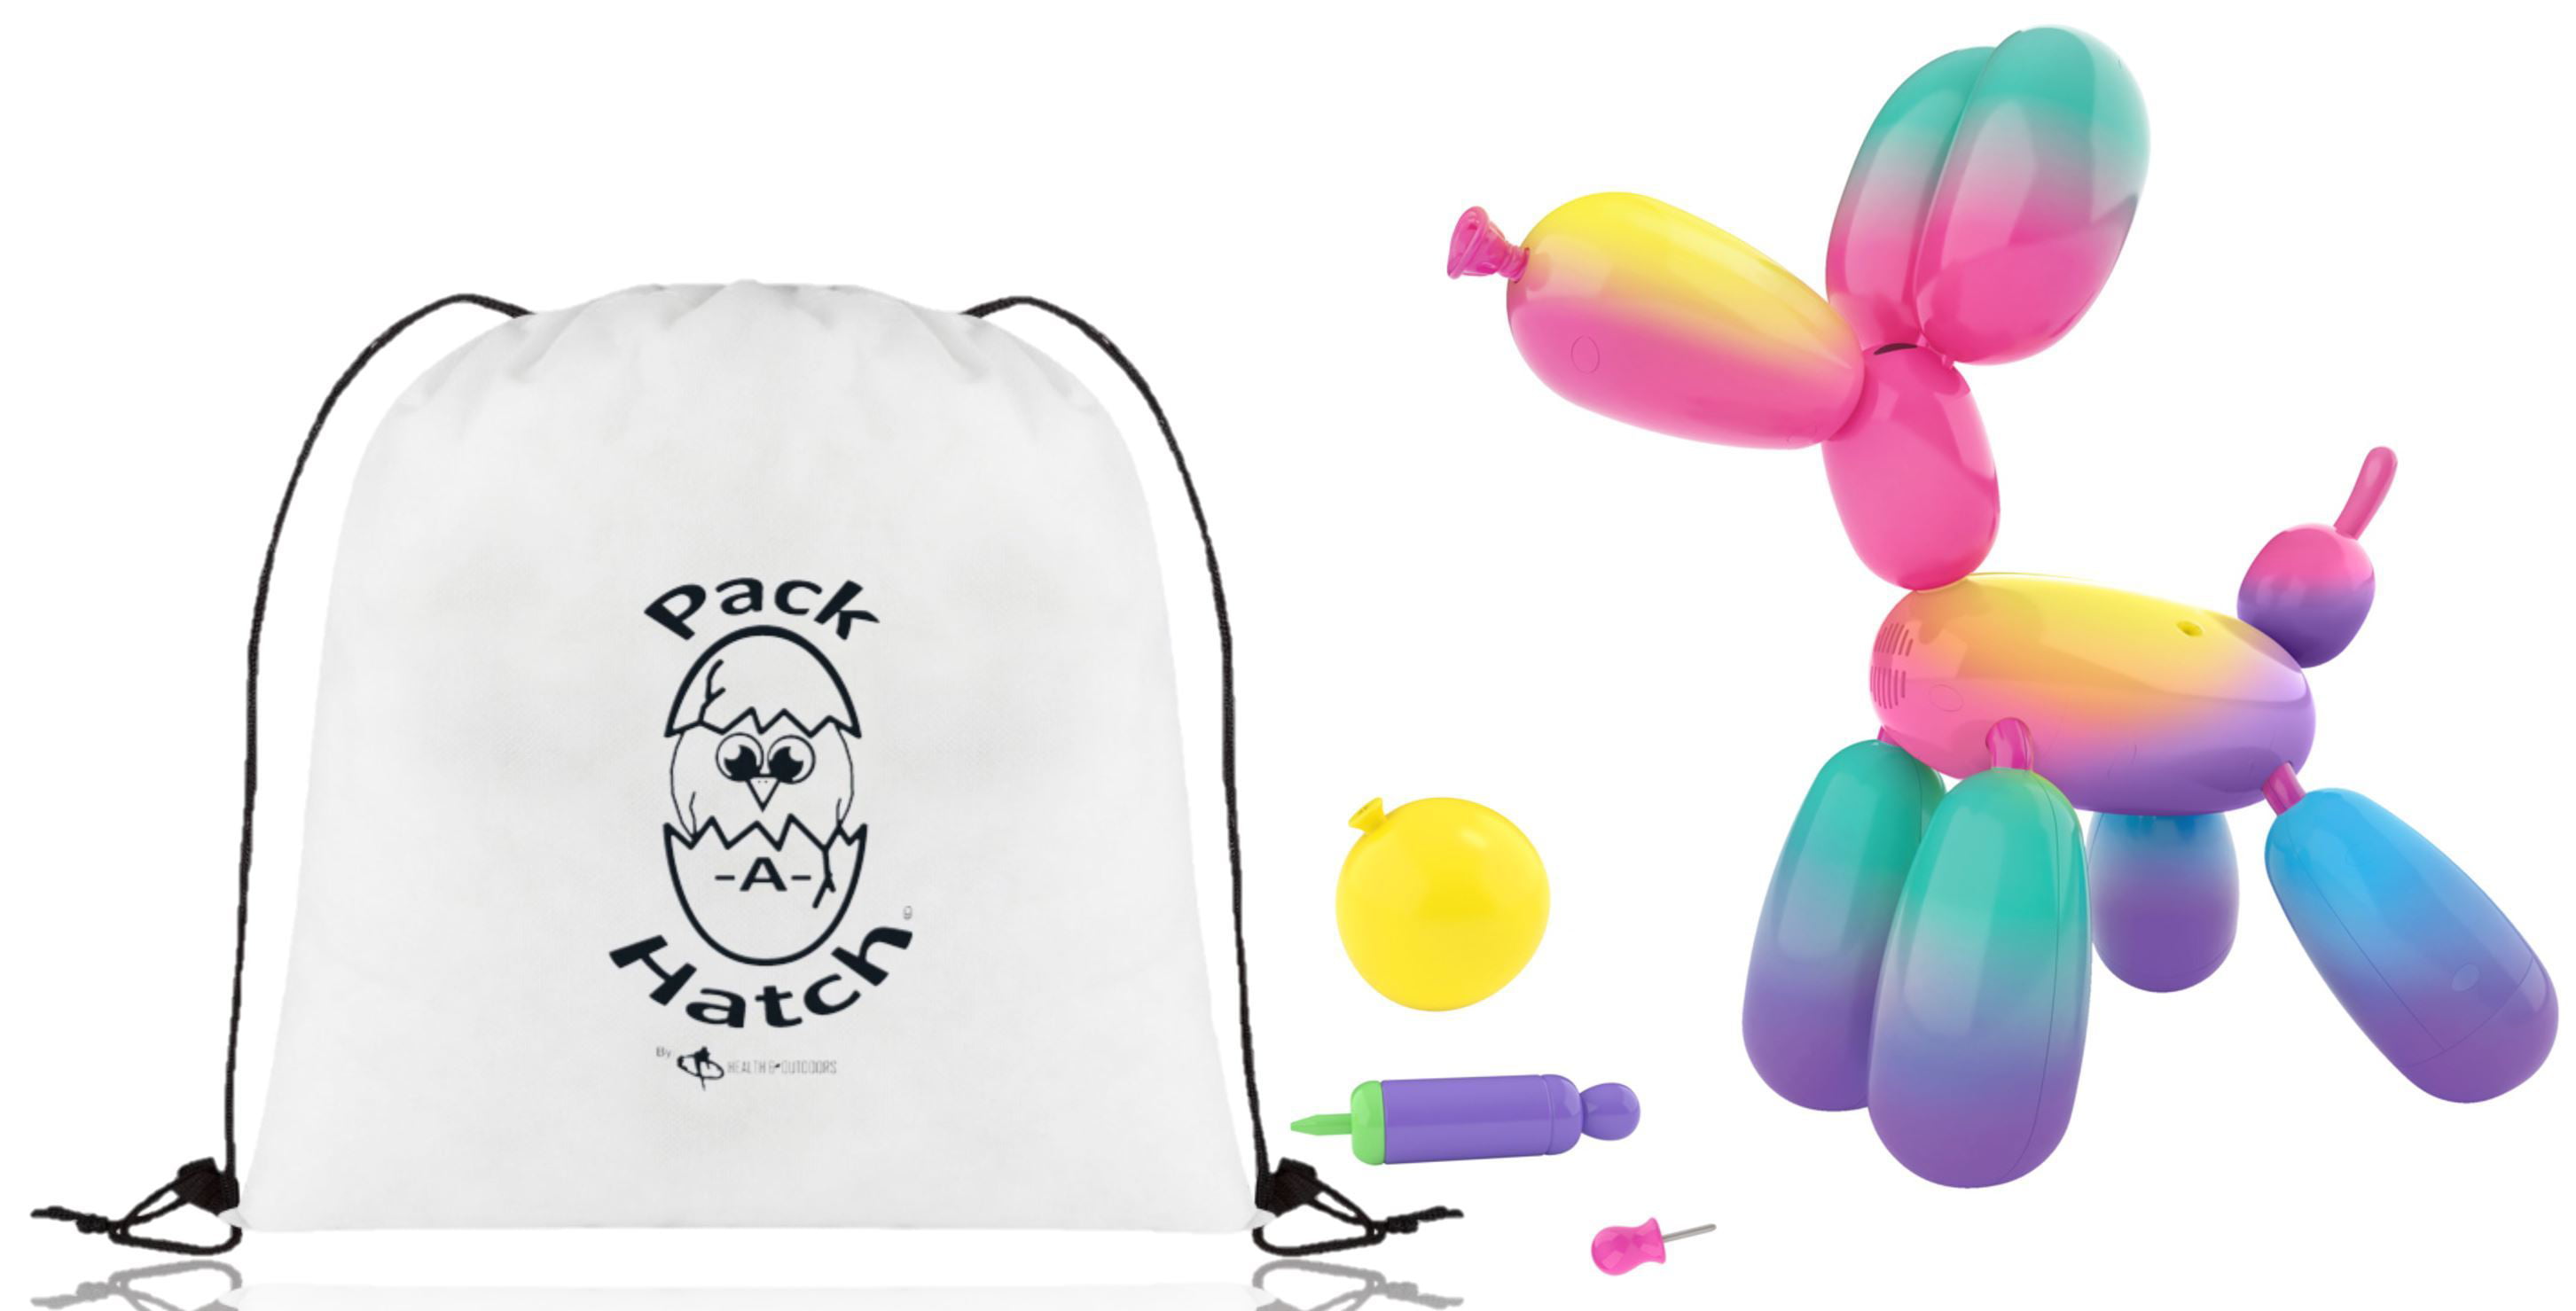 SQUEAKEE Rainbowie THE RAINBOW BALLOON DOG Interactive Toy NEW (1021W/62)